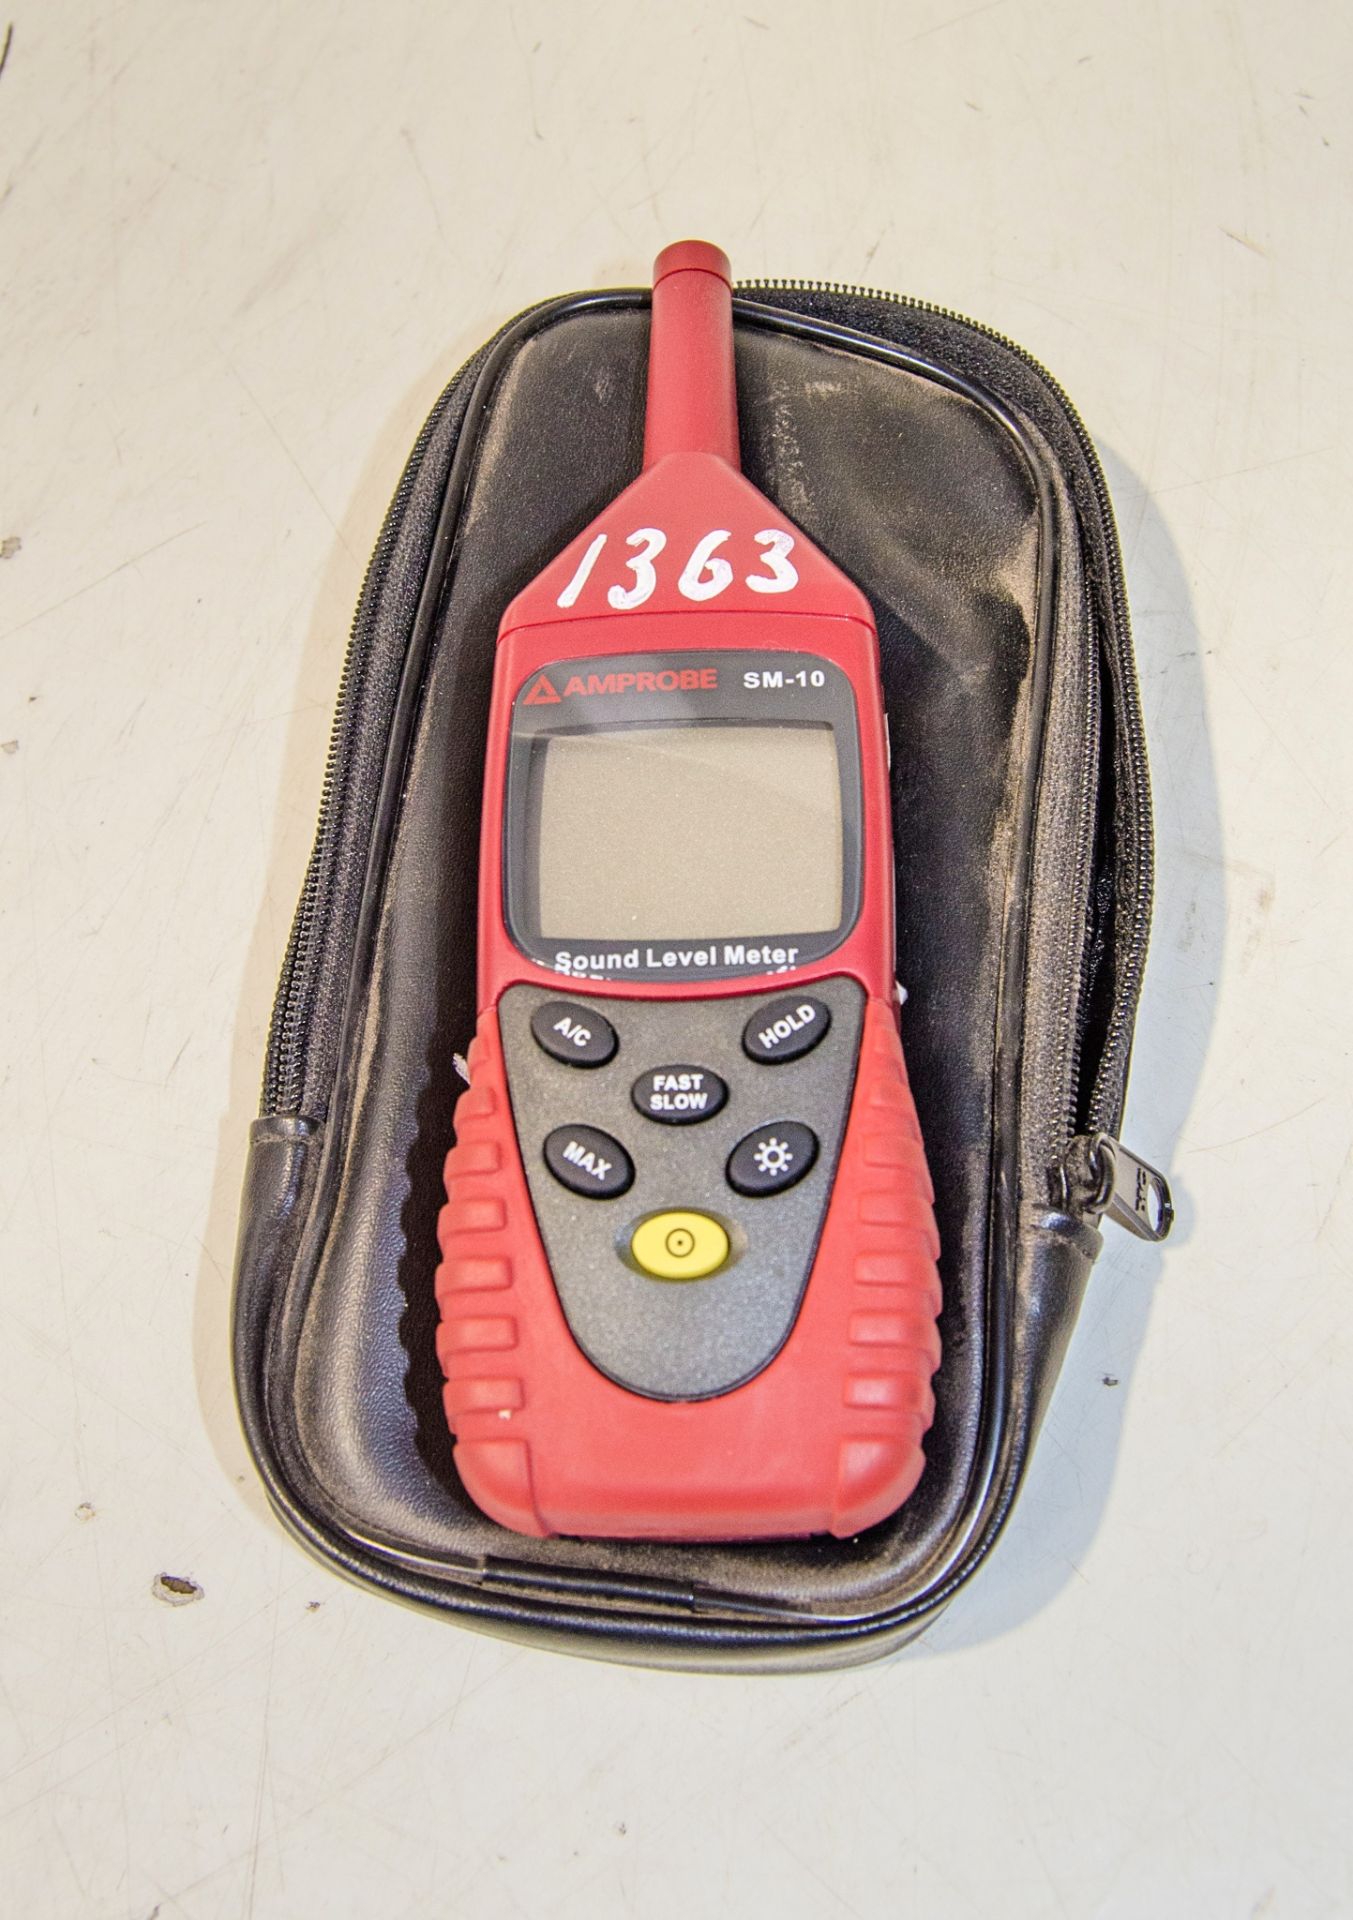 Amprobe SM-10 sound level meter c/w carry case